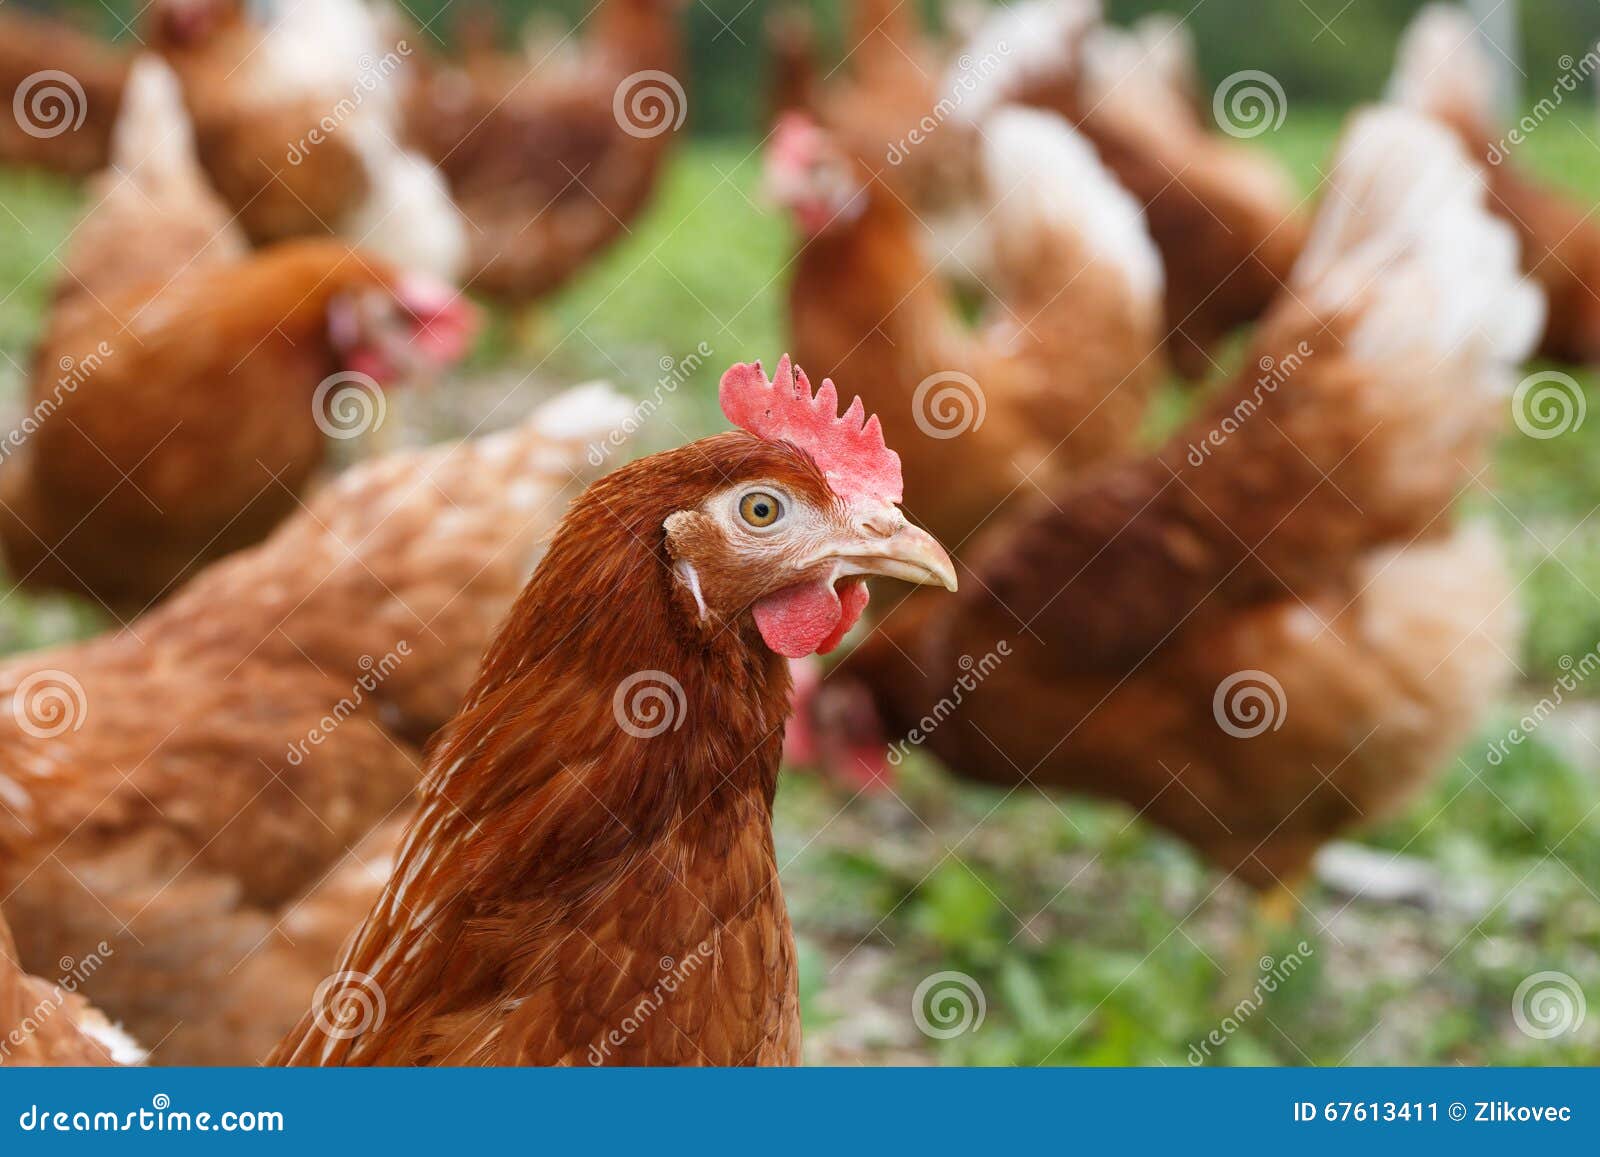 free-range hens (chicken) on an organic farm